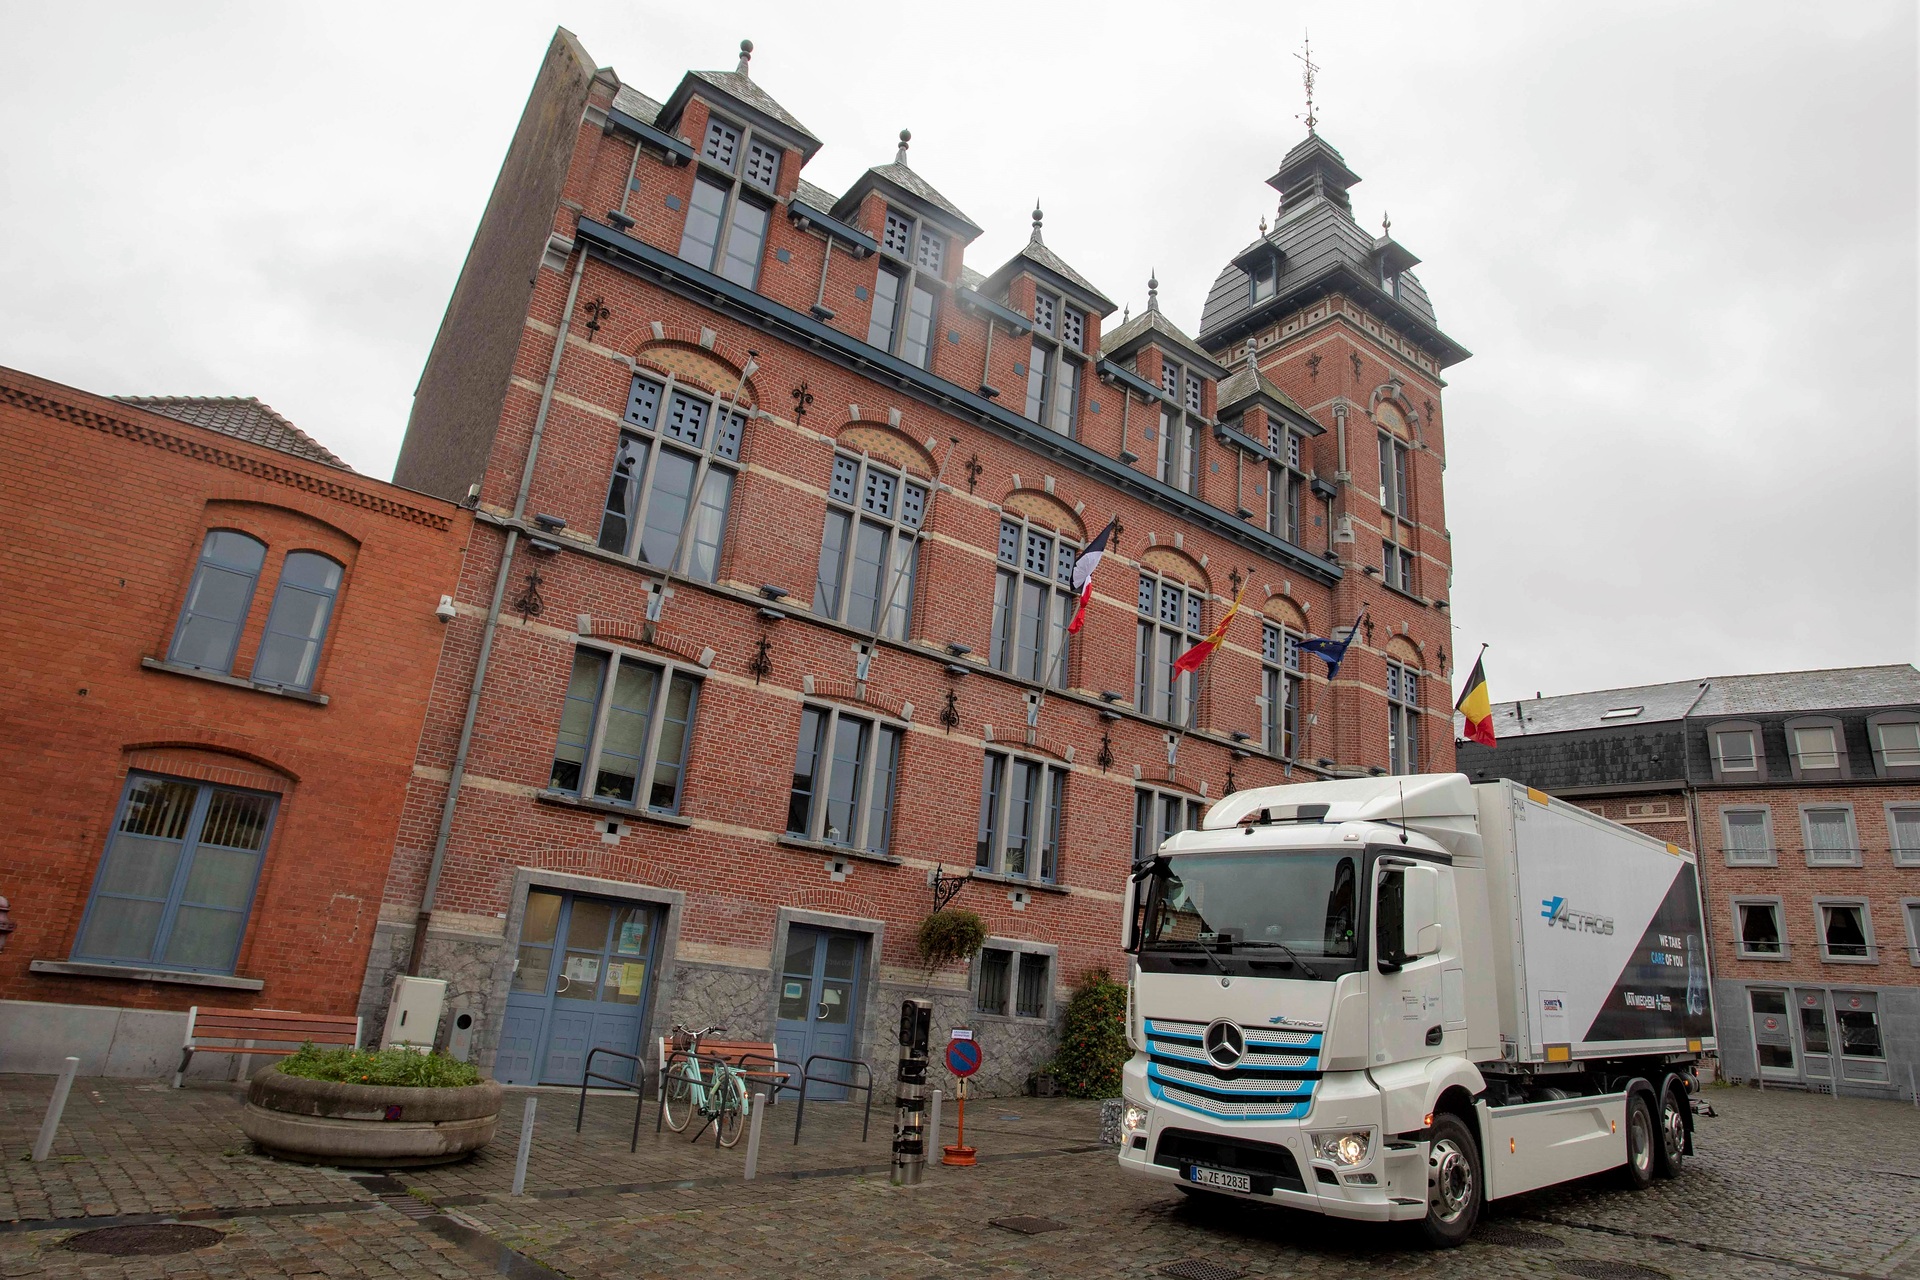 Erster Mercedes-Benz eActros in Belgien: Van Mieghem Logistics testet batterieelektrischen Lkw